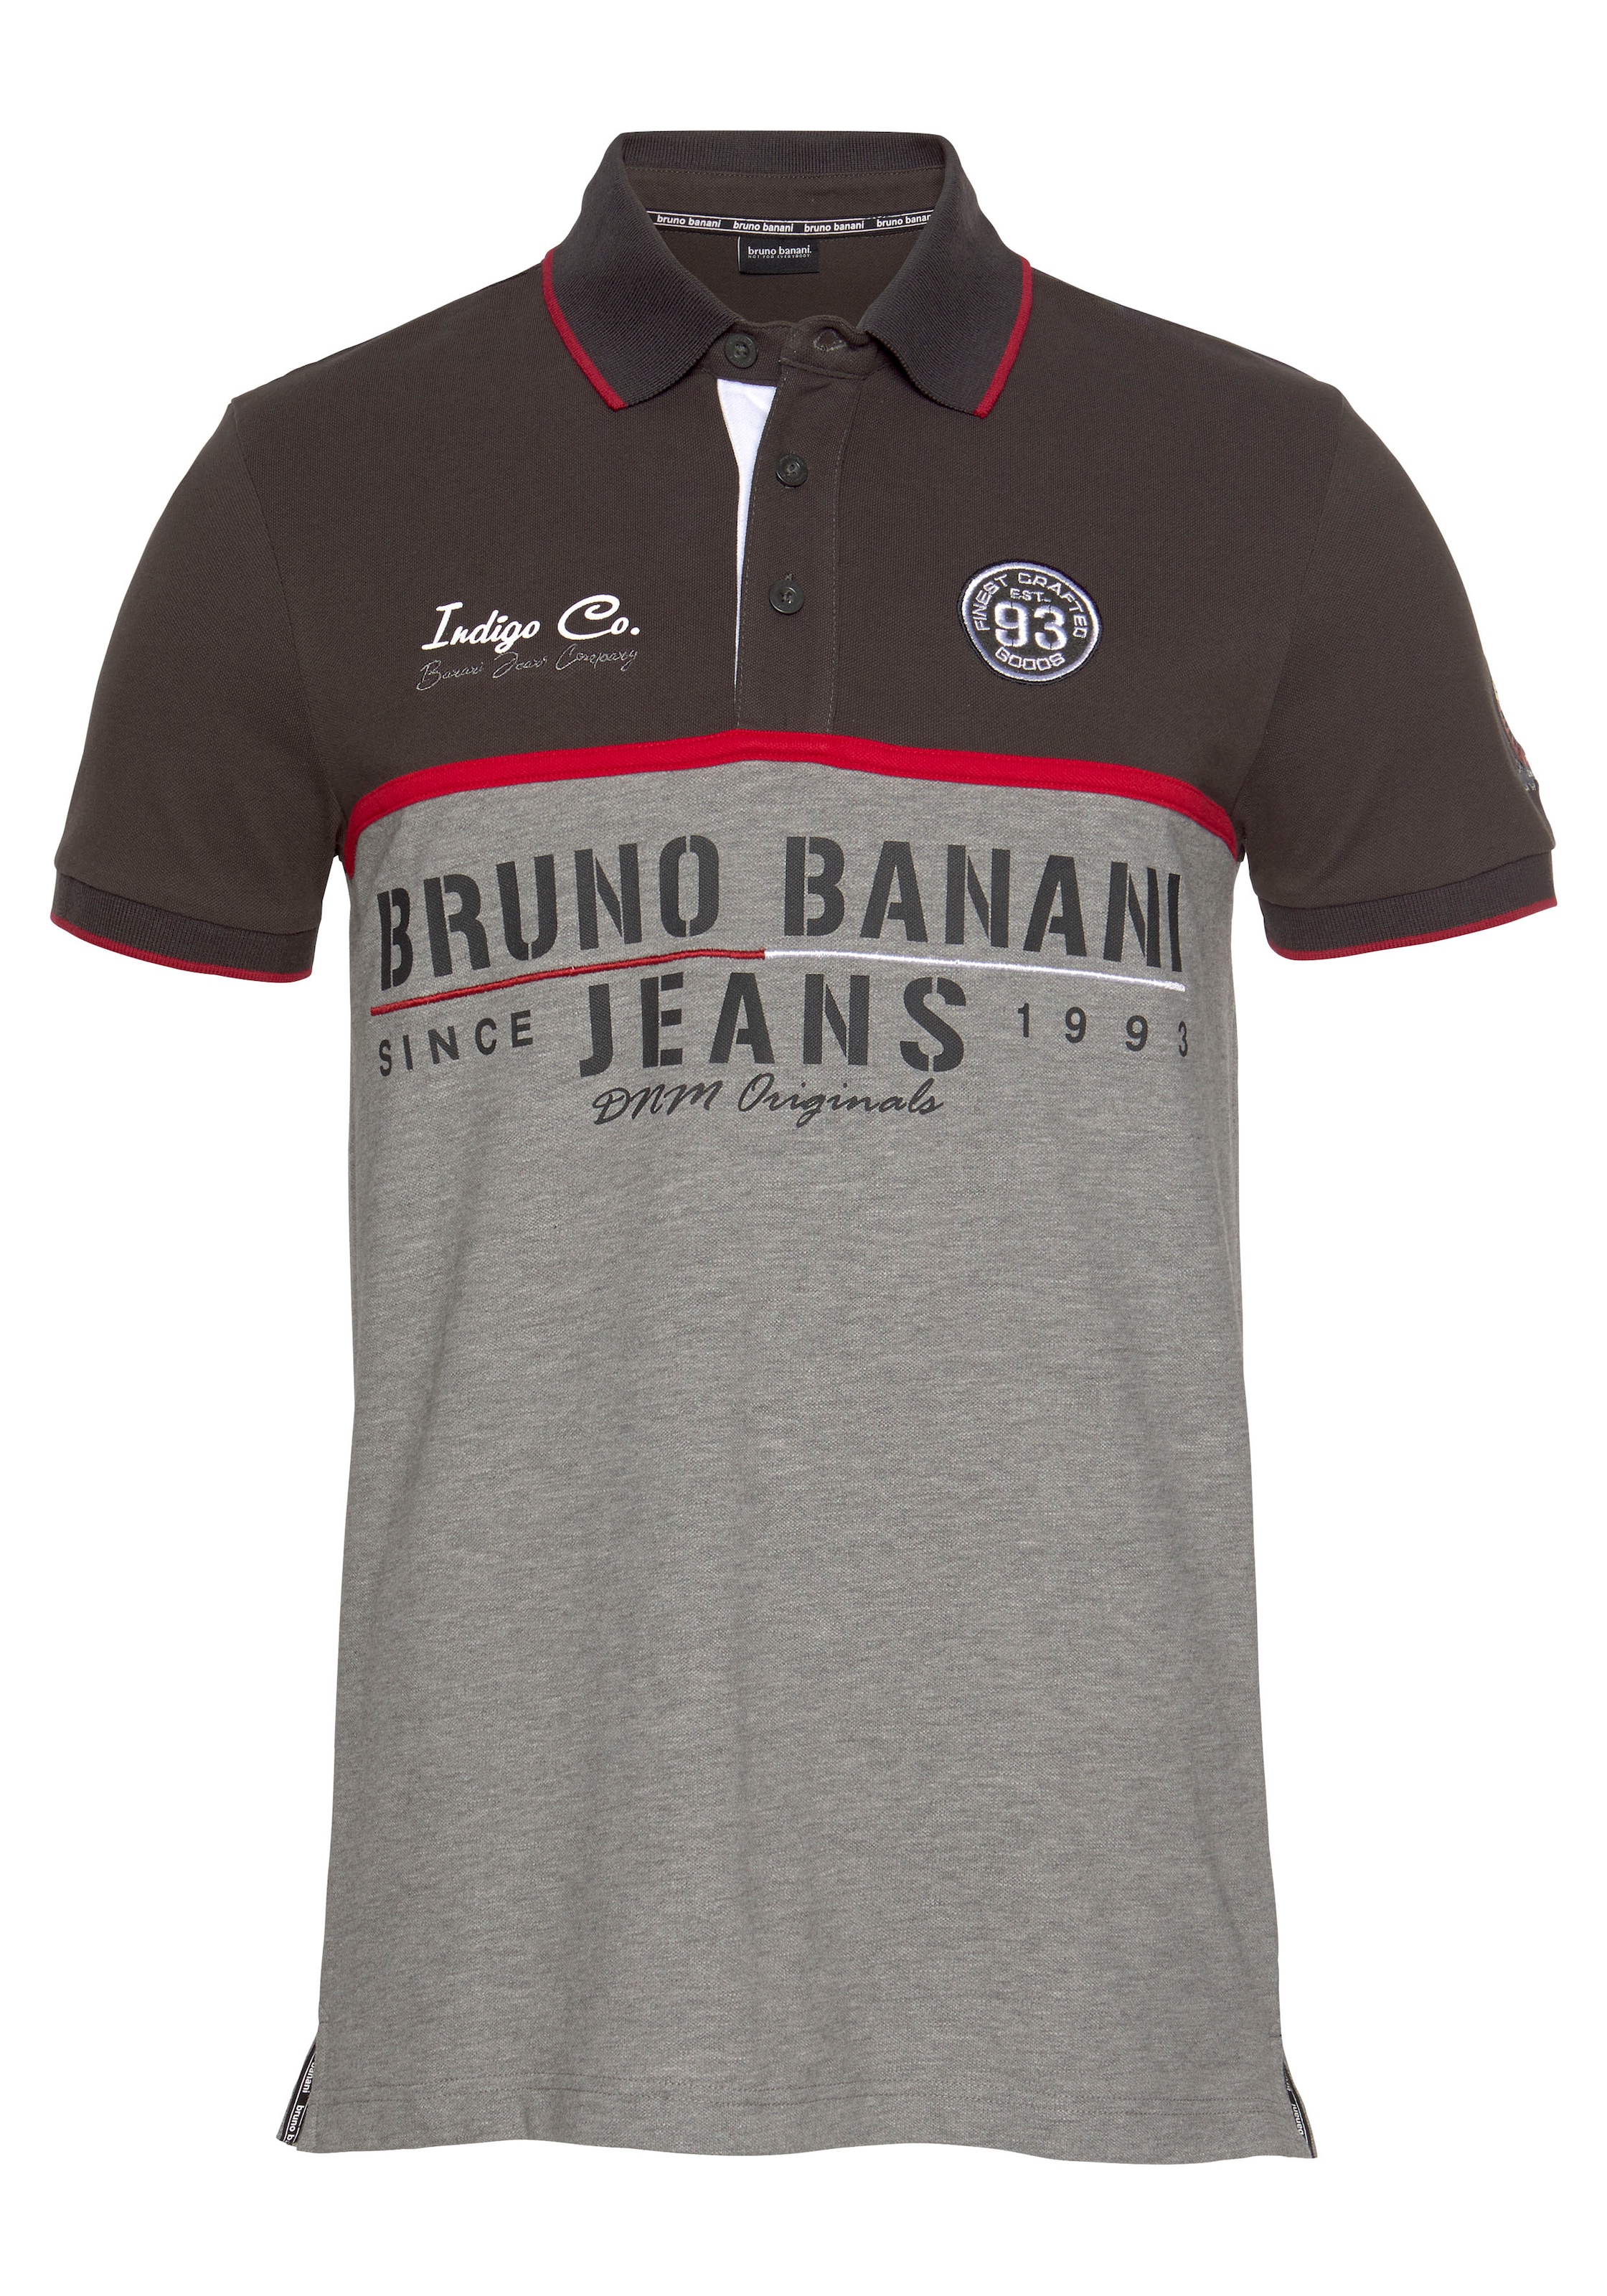 Bruno Banani Poloshirt, Piqué